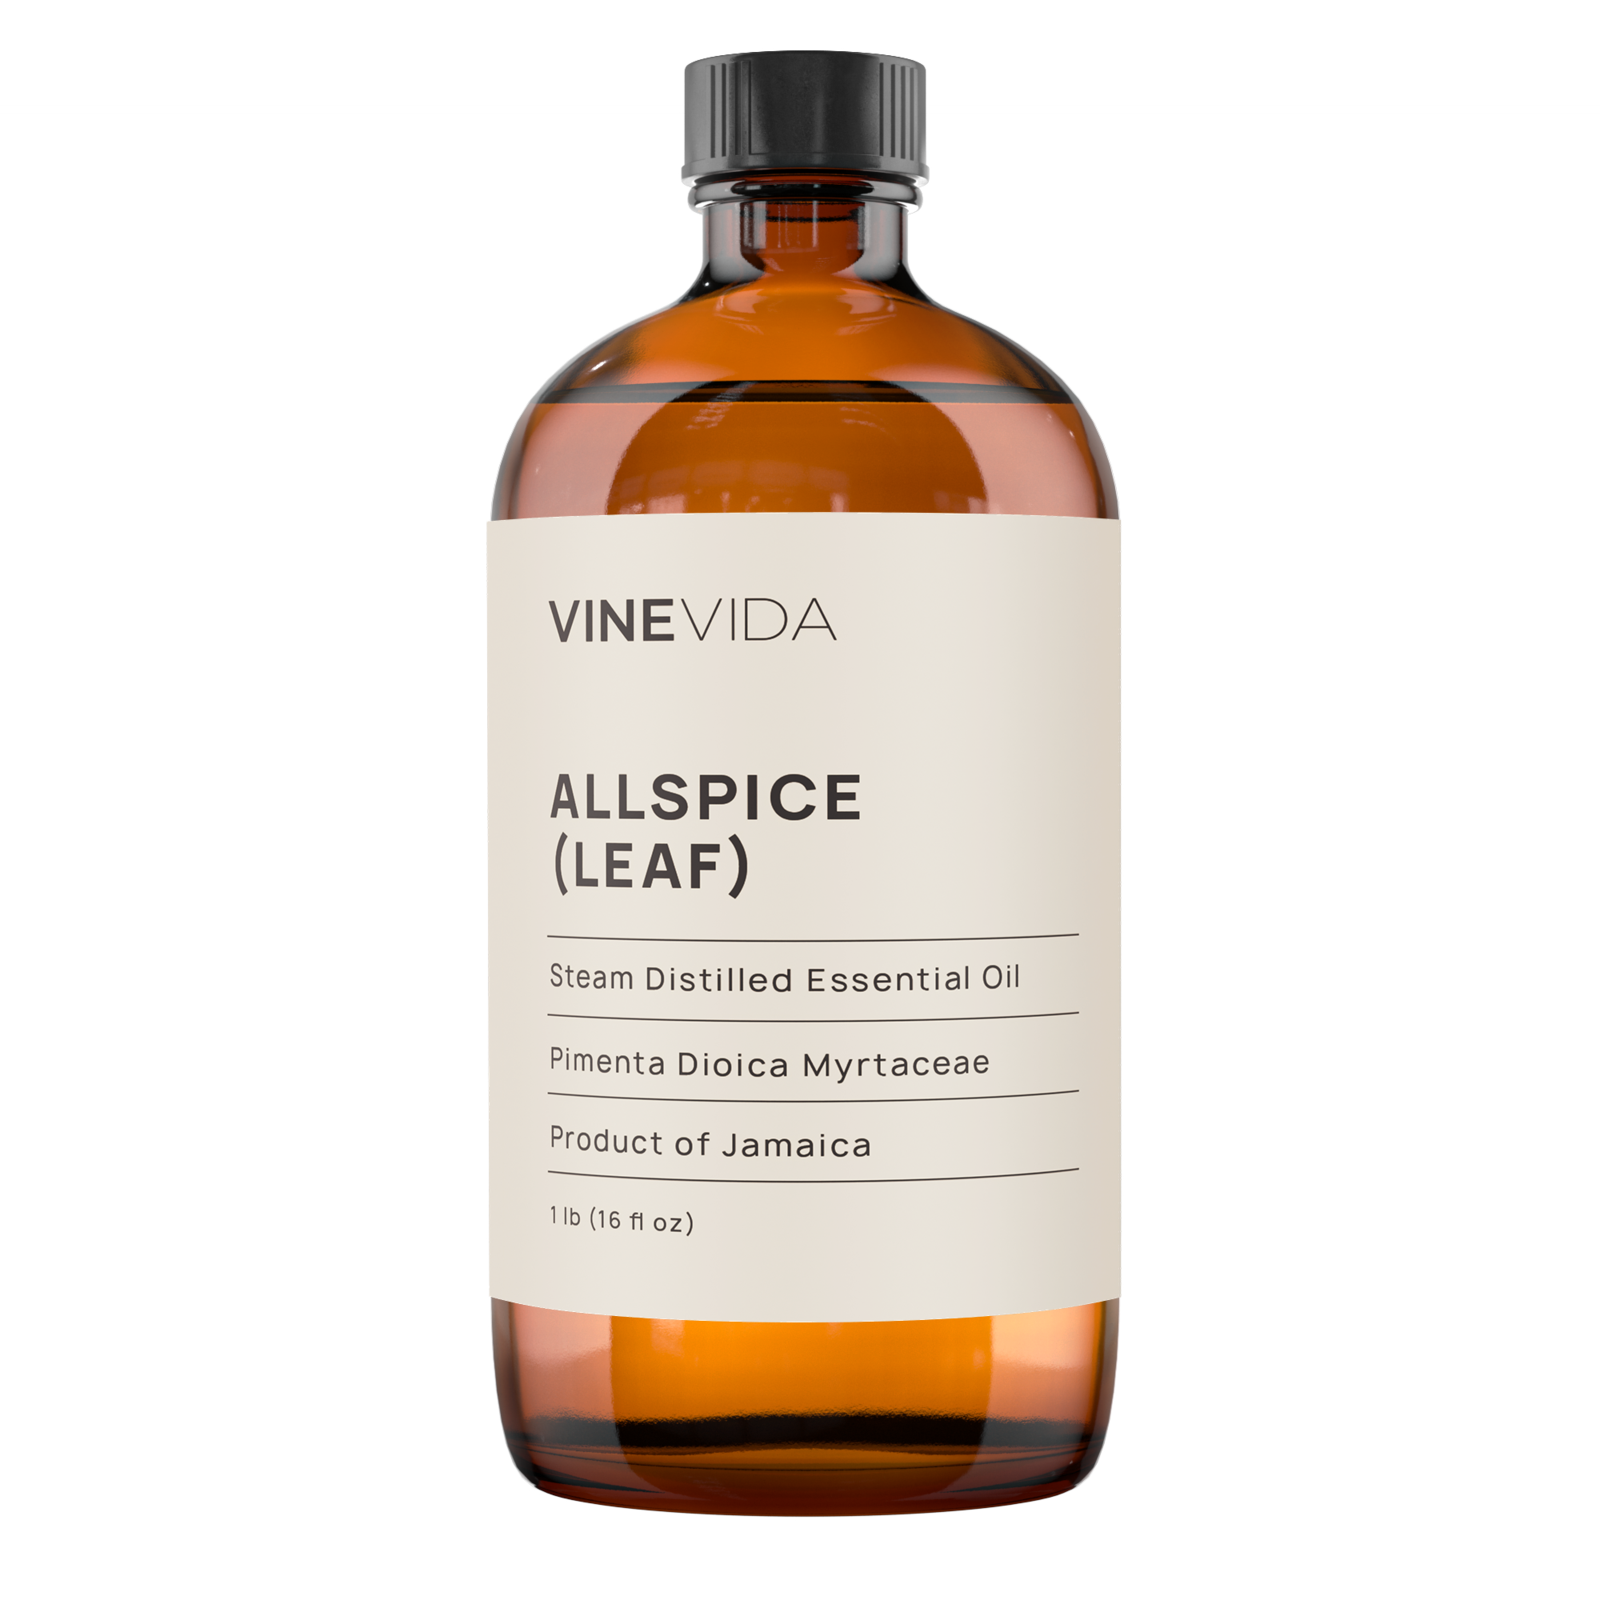 Allspice (Leaf) Essential Oil